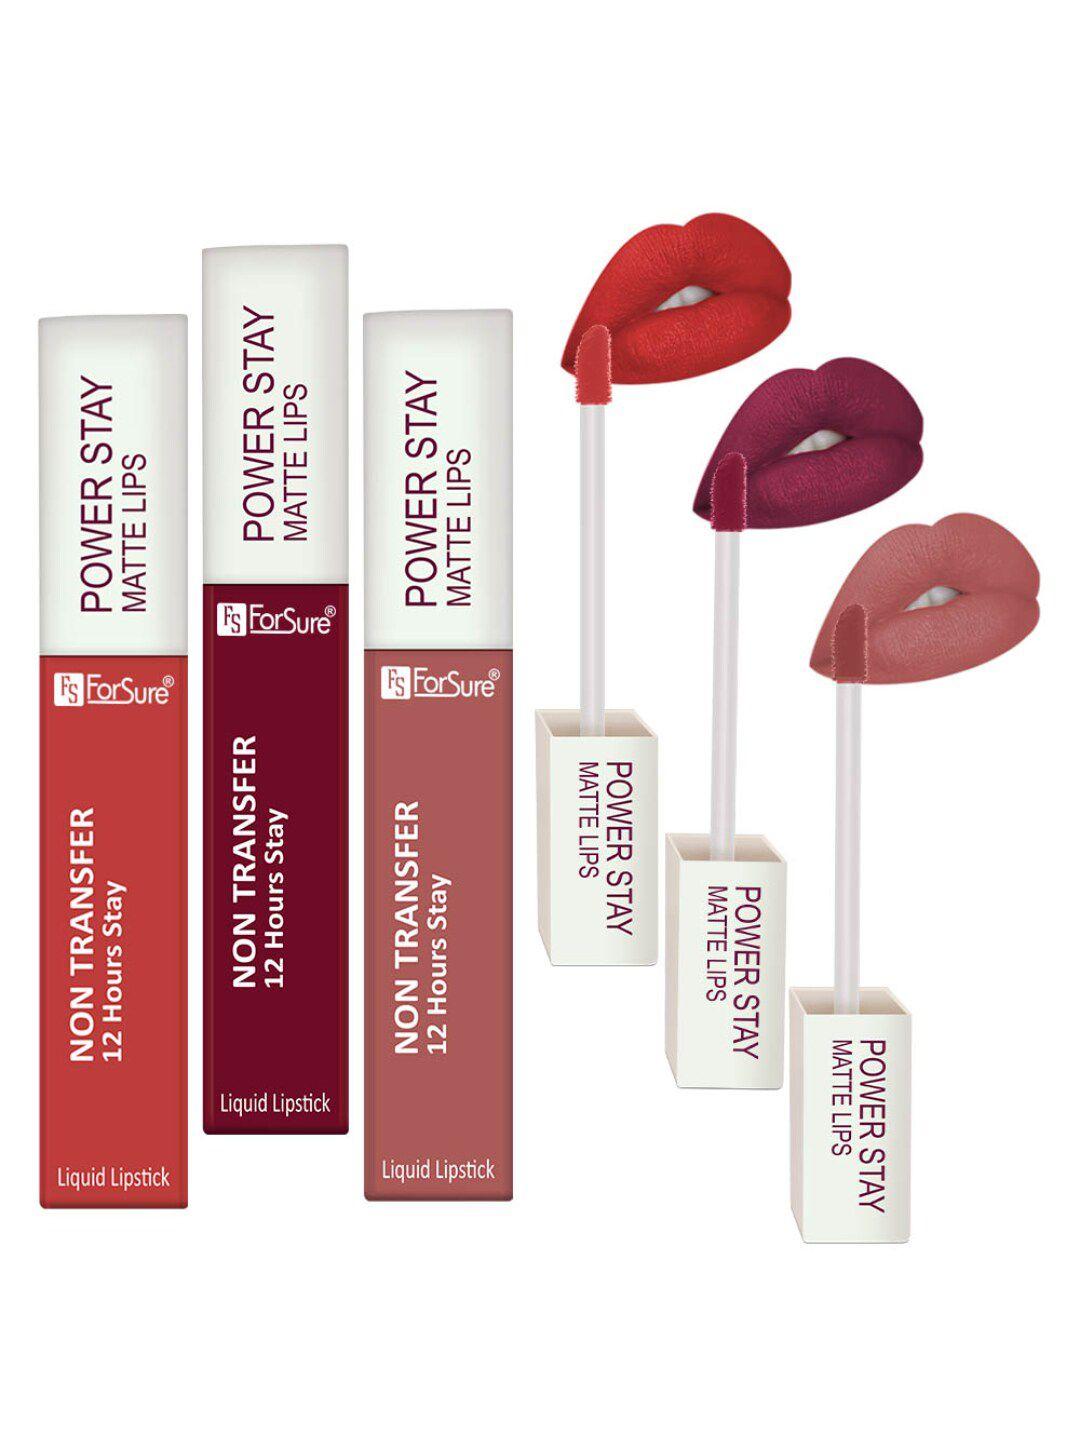 forsure power stay set of 3 lipsticks 4ml each-rose red 01+power maroon 09+carmel nude 21